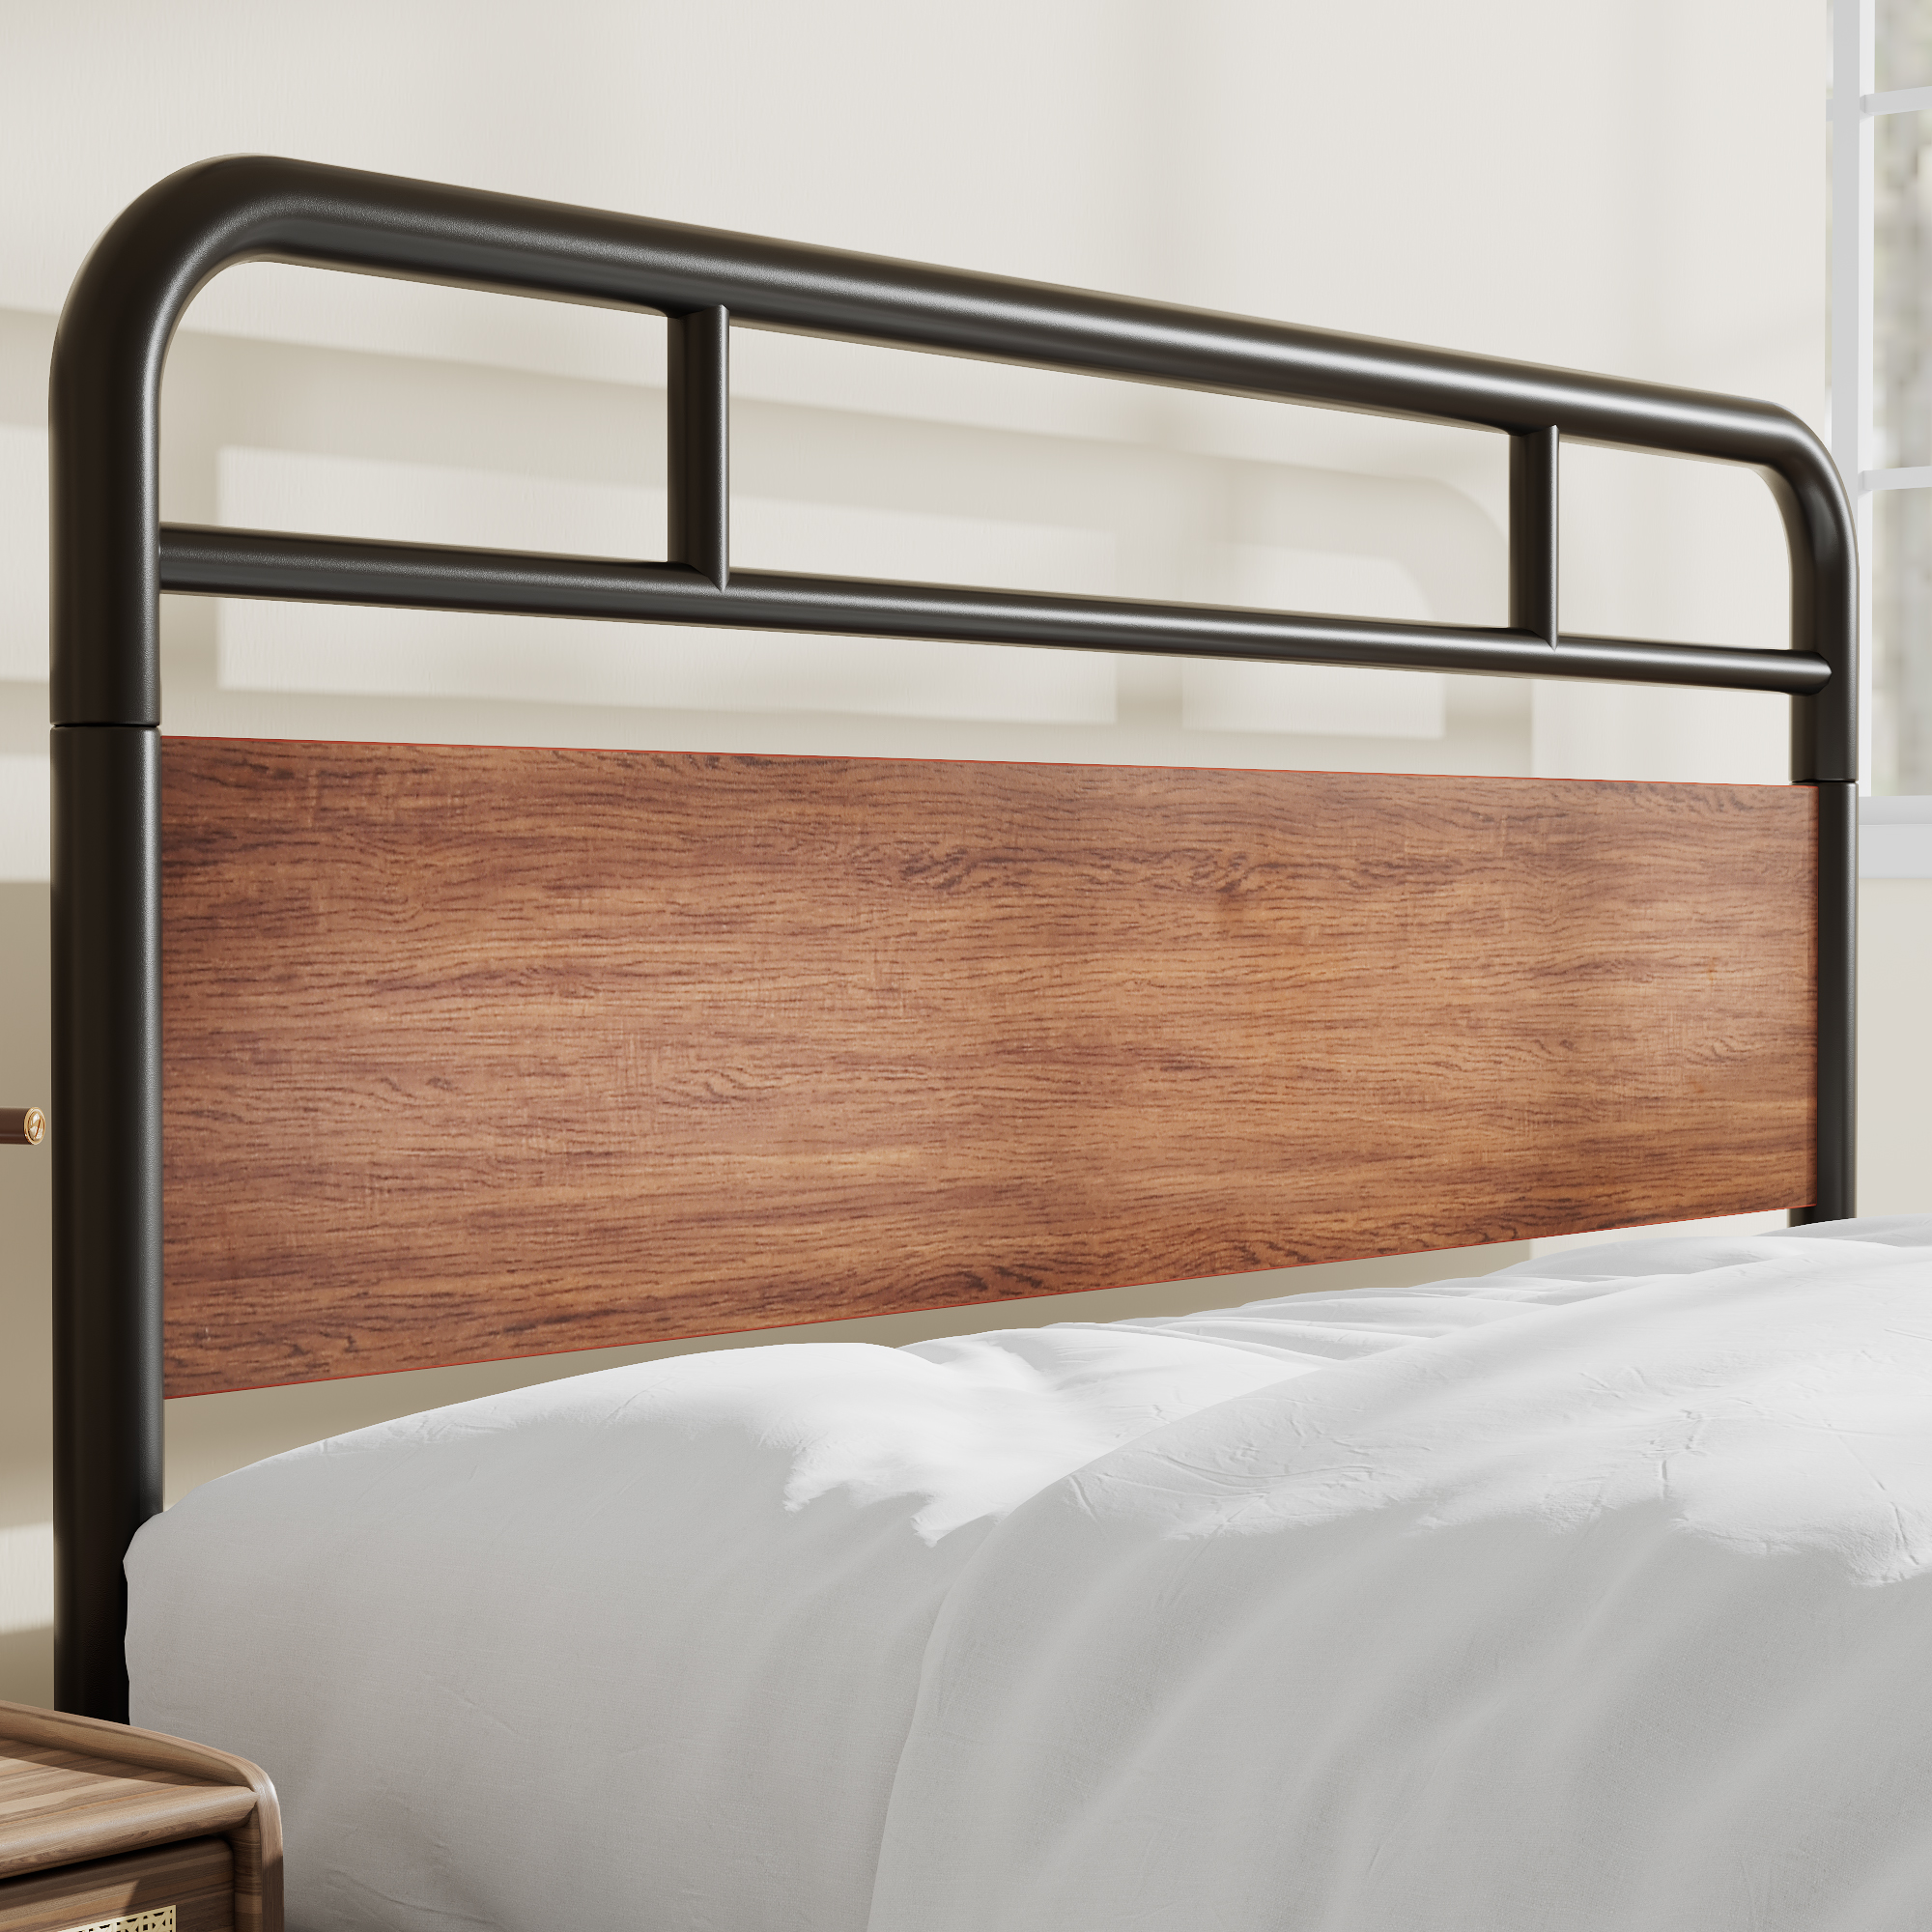 Sha Cerlin Light Brown Queen Size Metal Platform Bed Frame with Industrial Heavy Duty Wooden Headboard - image 2 of 10